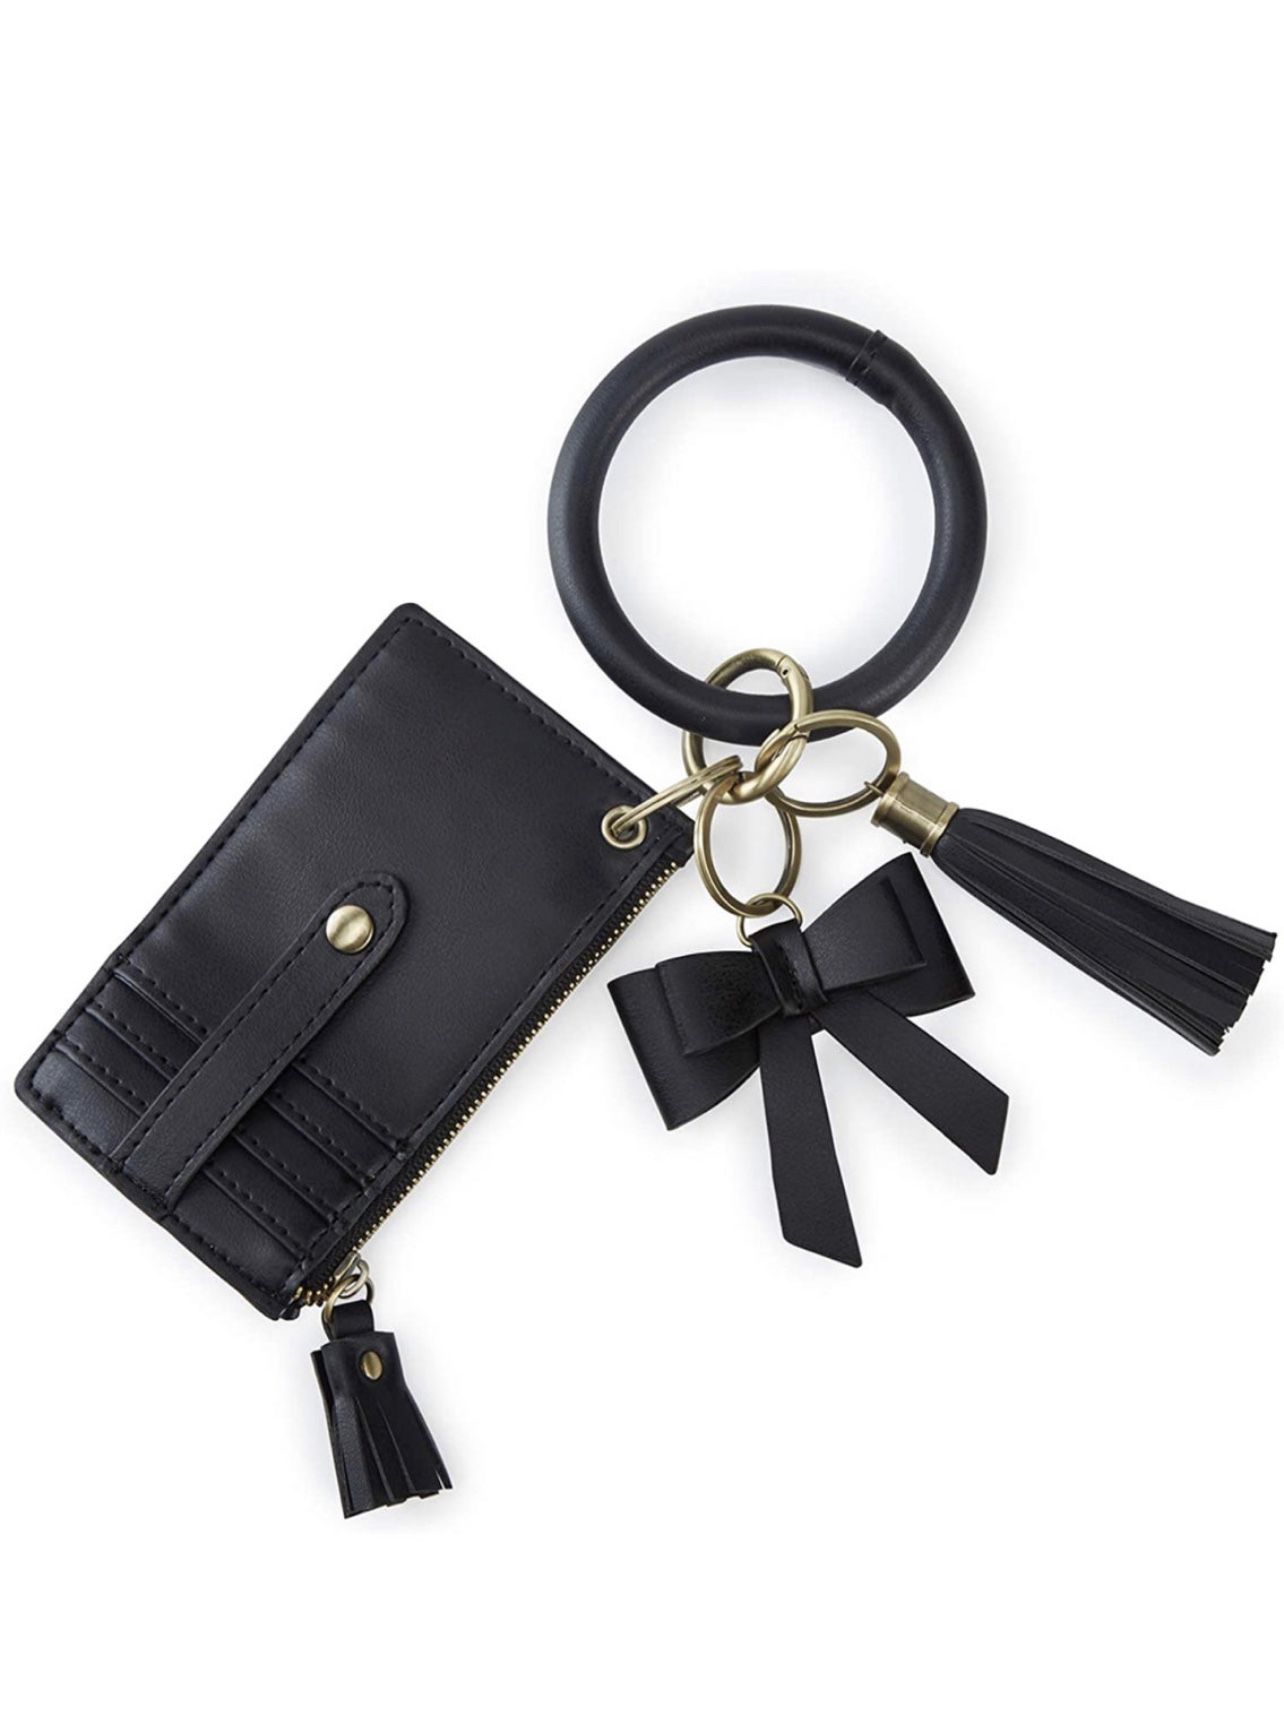 Wristlet Keychain Key Ring Wallet Bracelets Card Holder Purse with Tassel